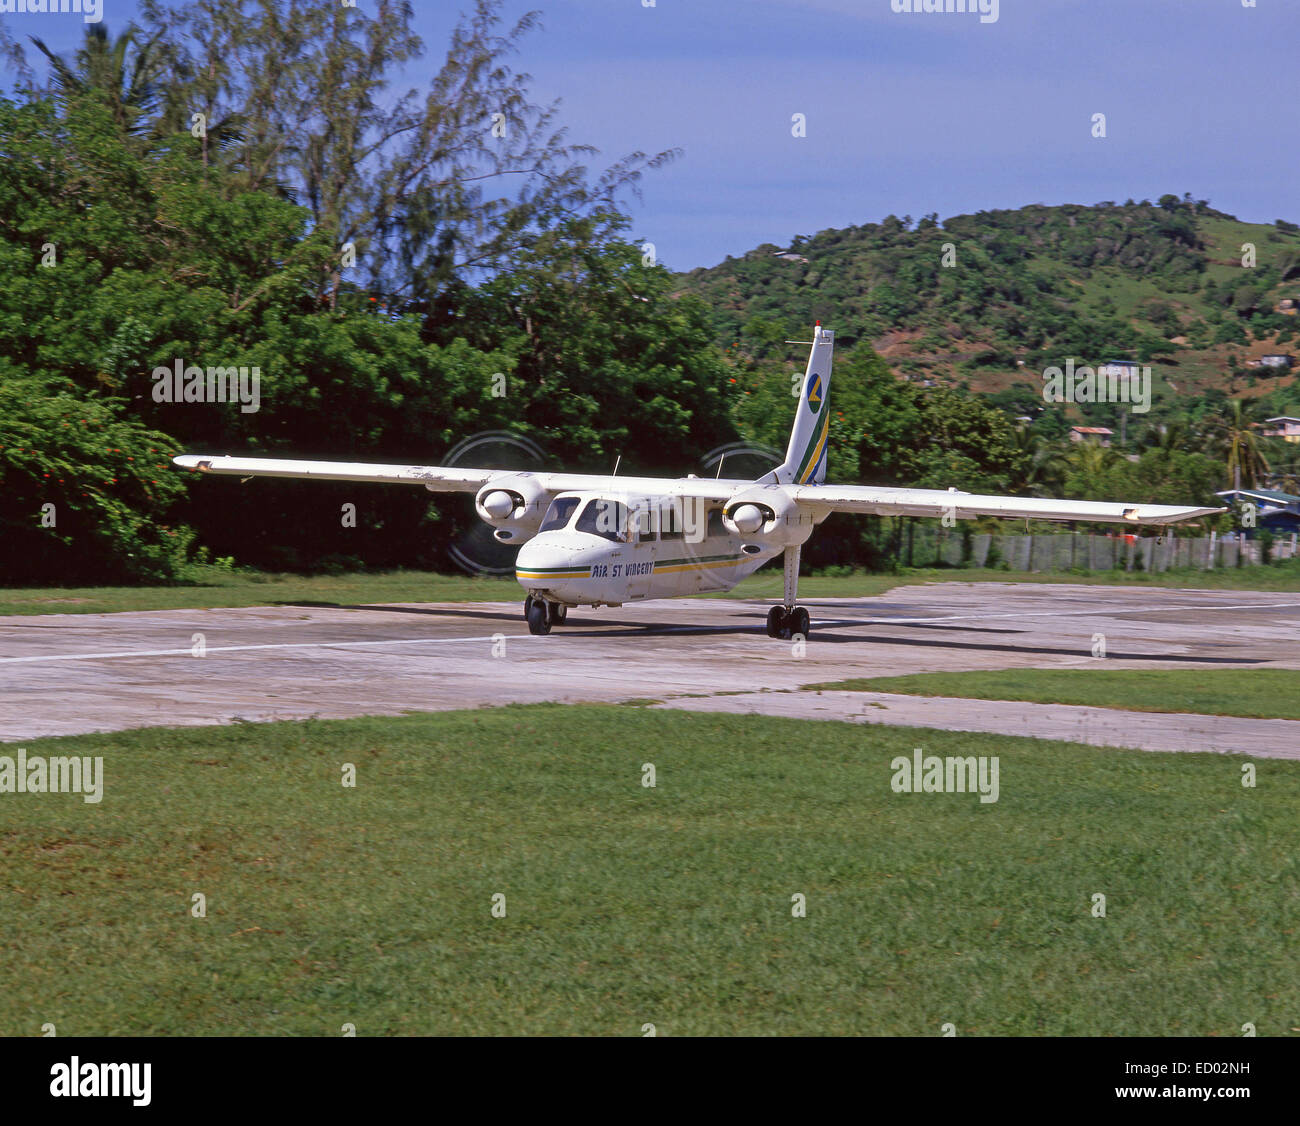 Aire San Vicente avioneta gravar en la pista, San Vicente, San Vicente y las Granadinas, Las Antillas, Caribe Foto de stock